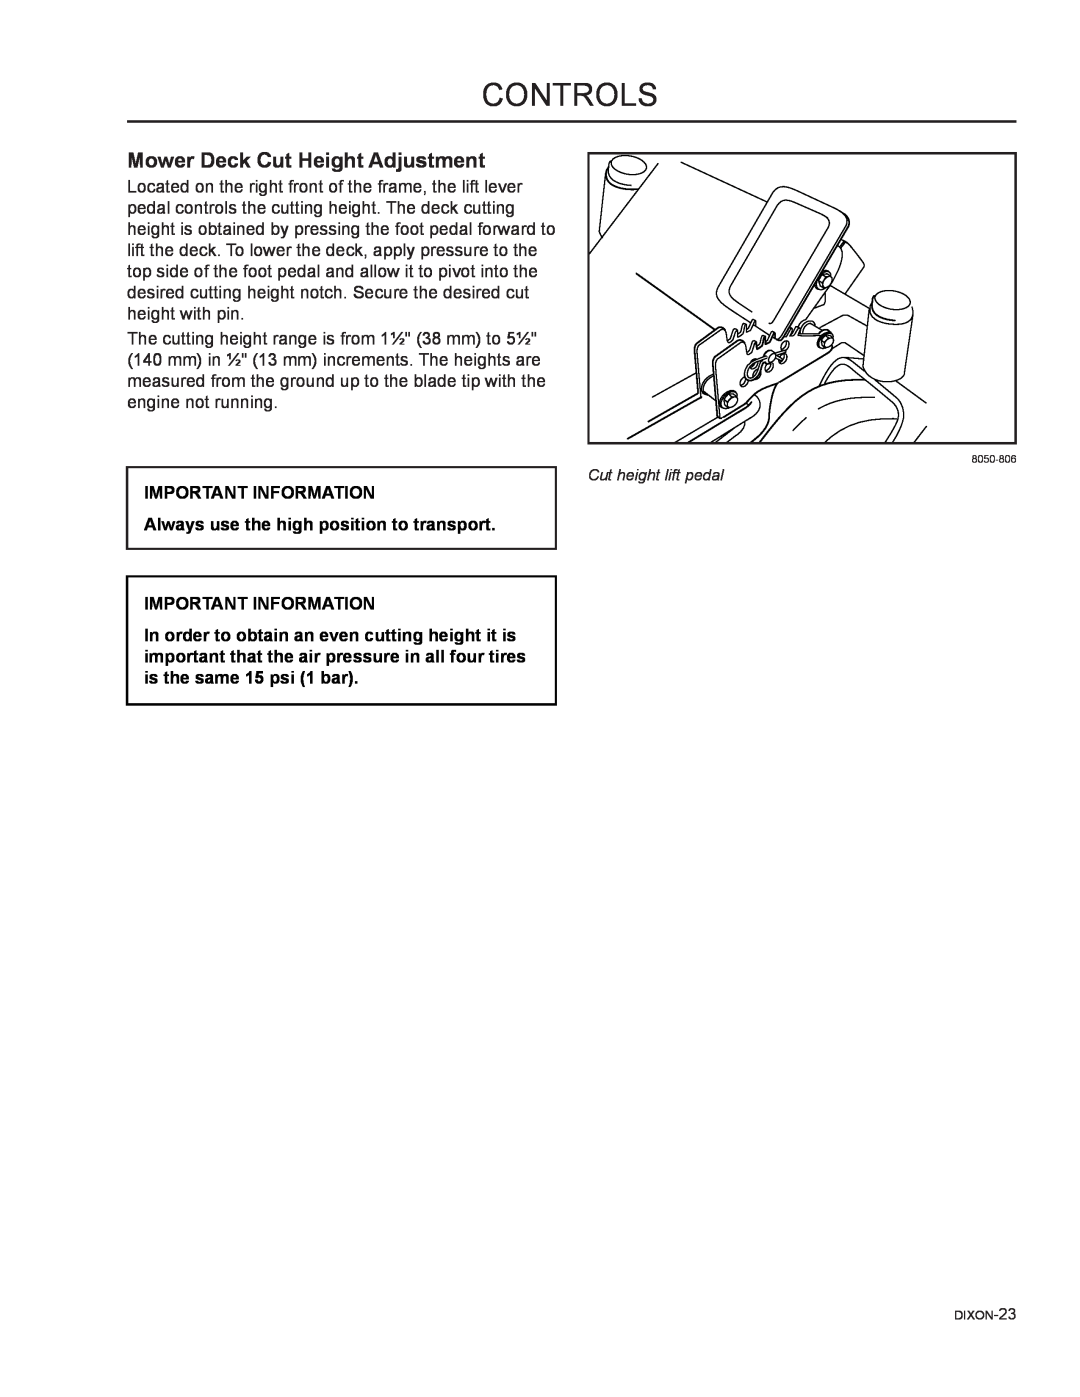 Dixon 44, 44, 44, 36, 36, 42, 42 manual Mower Deck Cut Height Adjustment, Controls, Important Information 